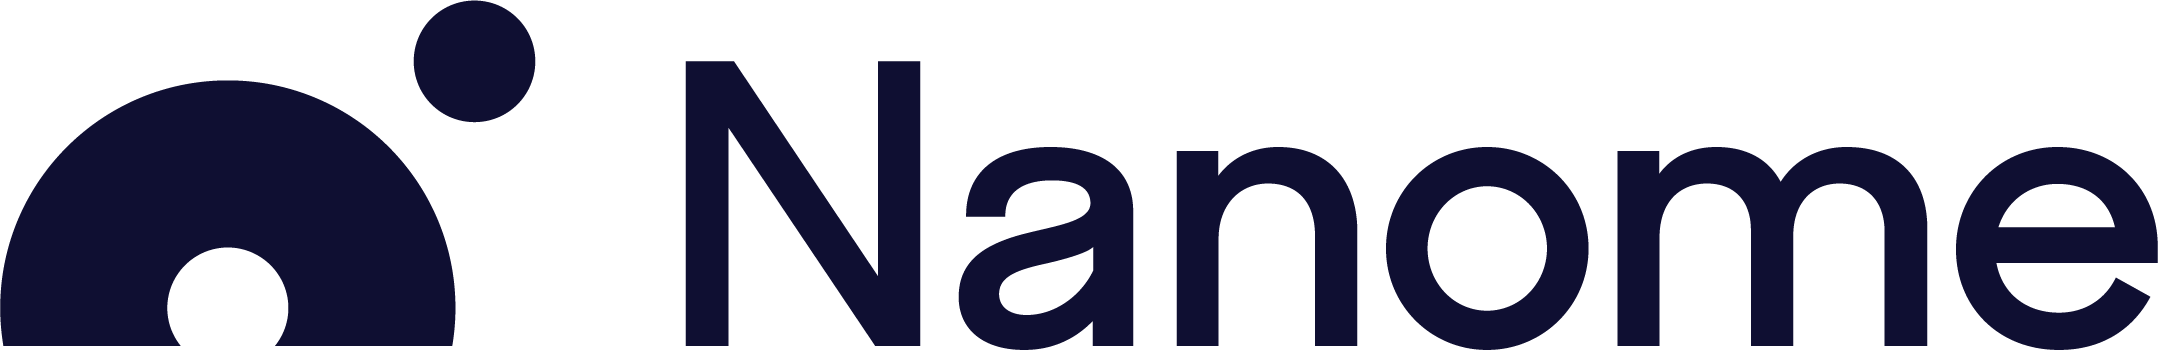 Nanome_Logo_Horizontal-DarkBlue